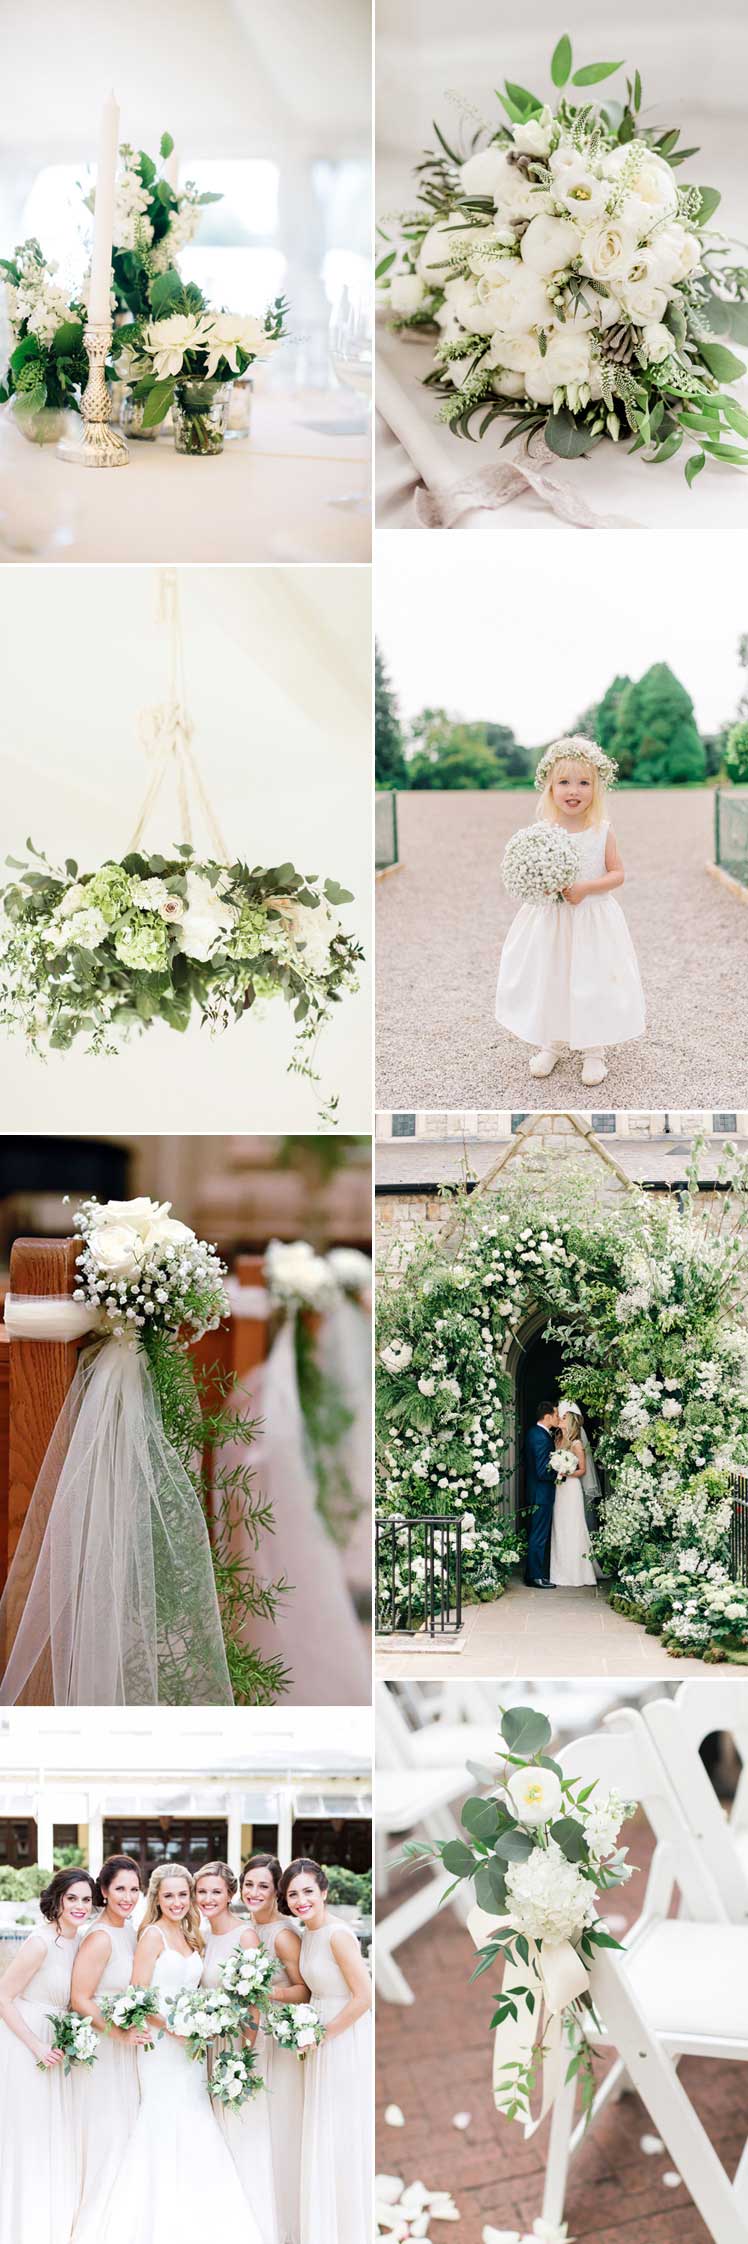 White flower ideas for a spring wedding 